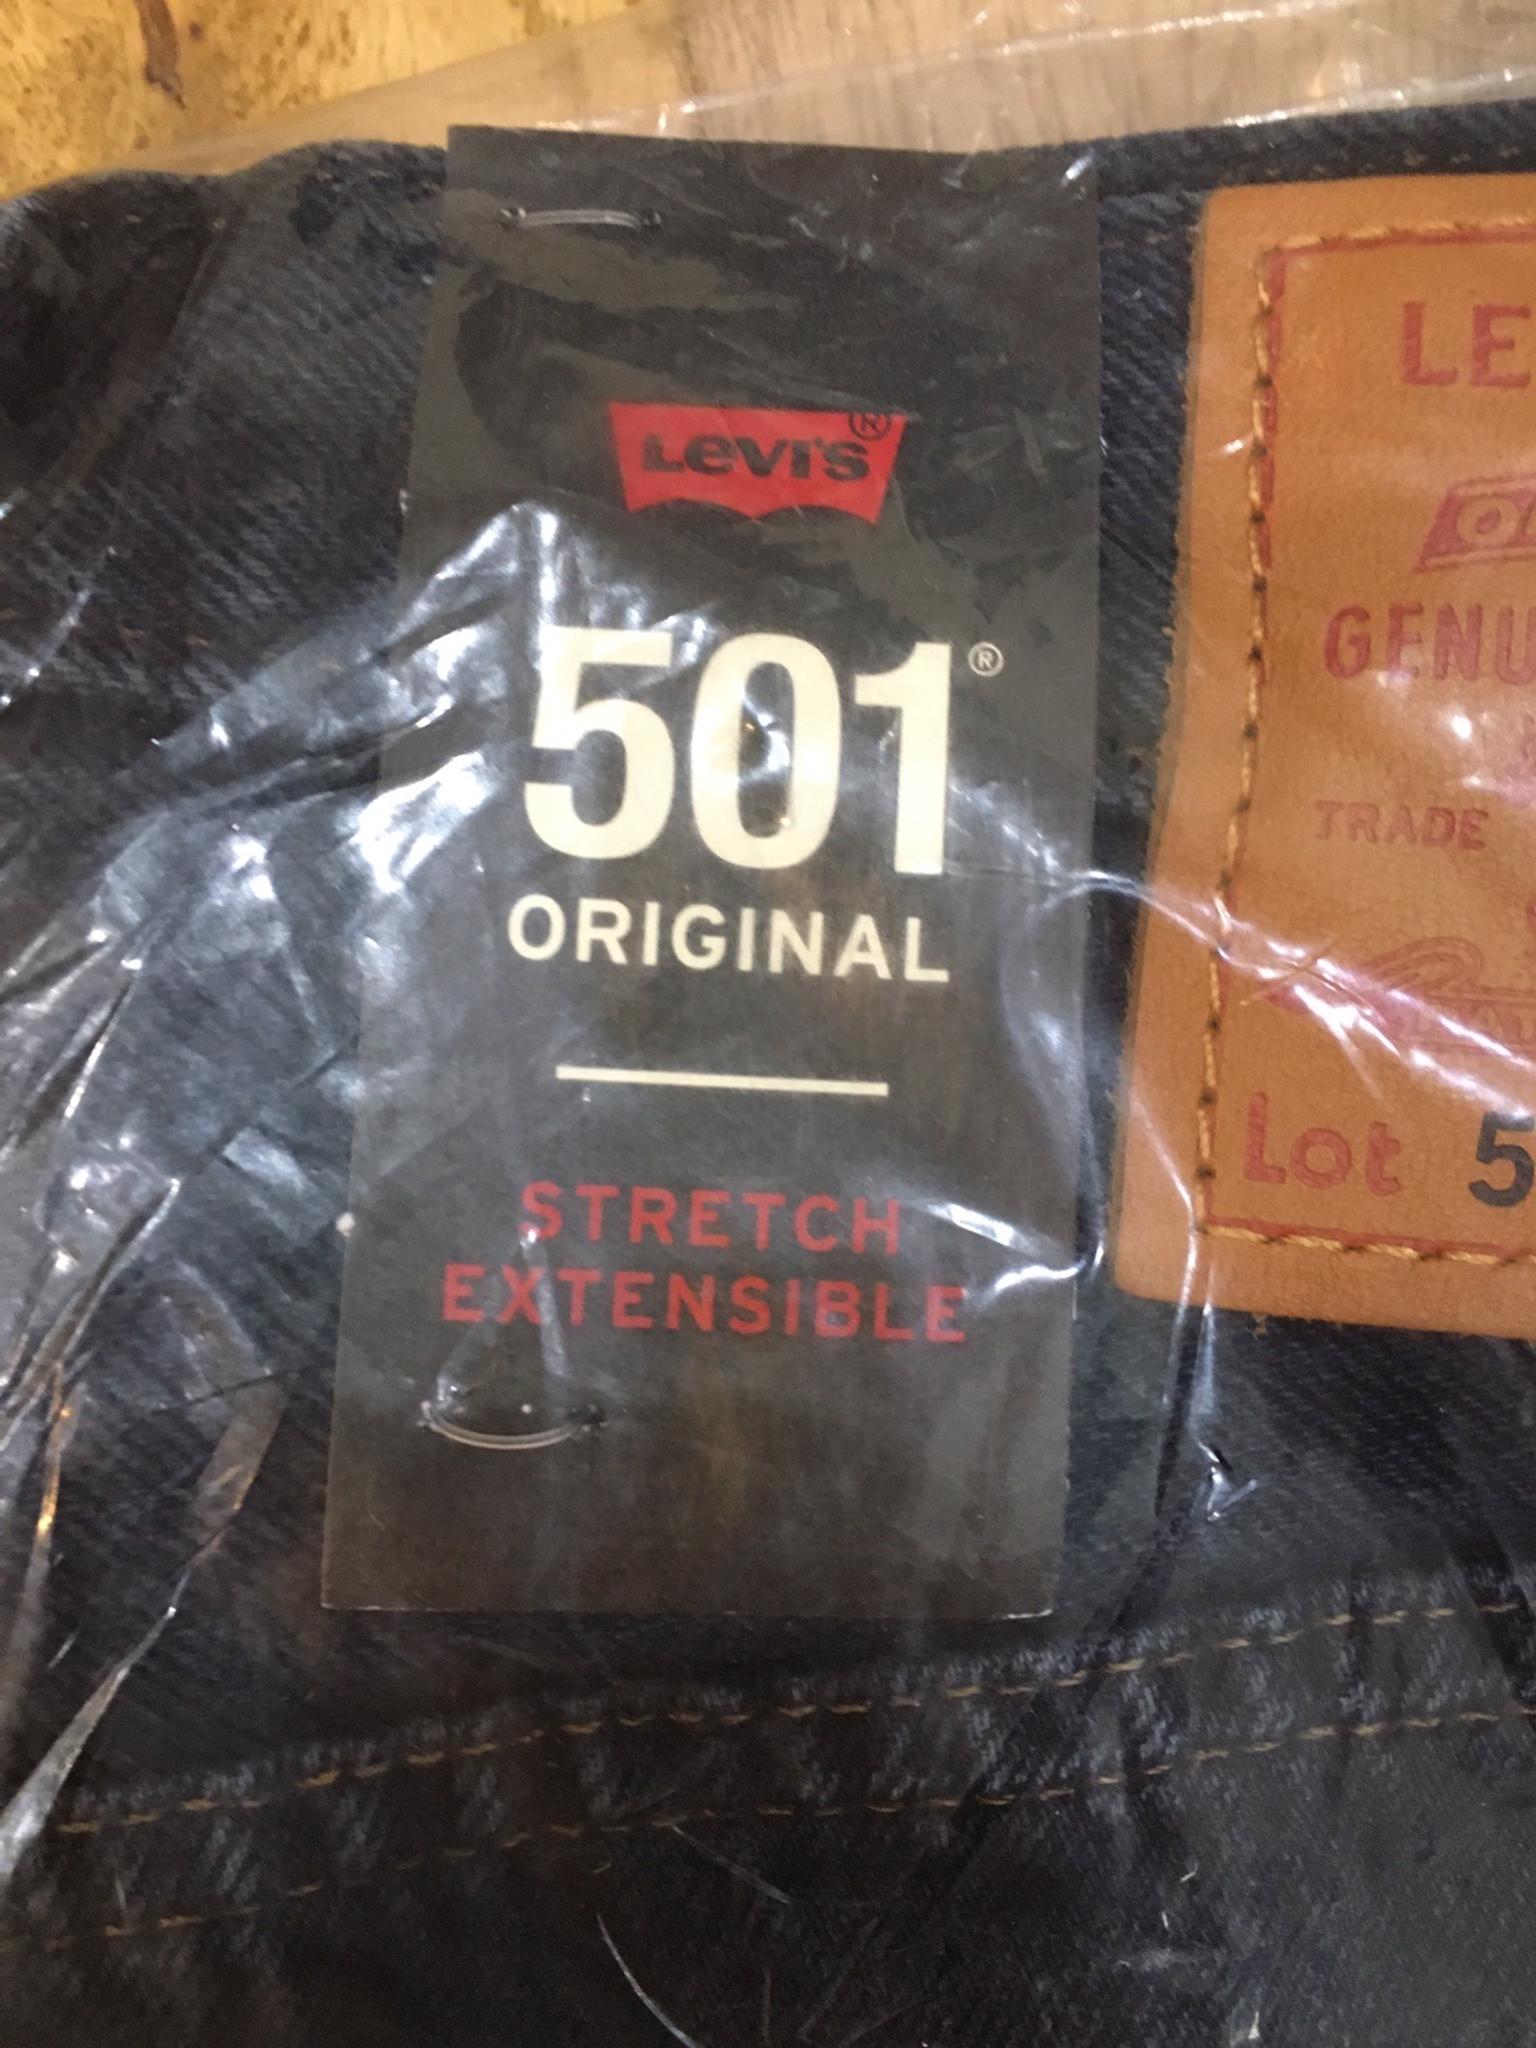 levi's 501 original stretch extensible